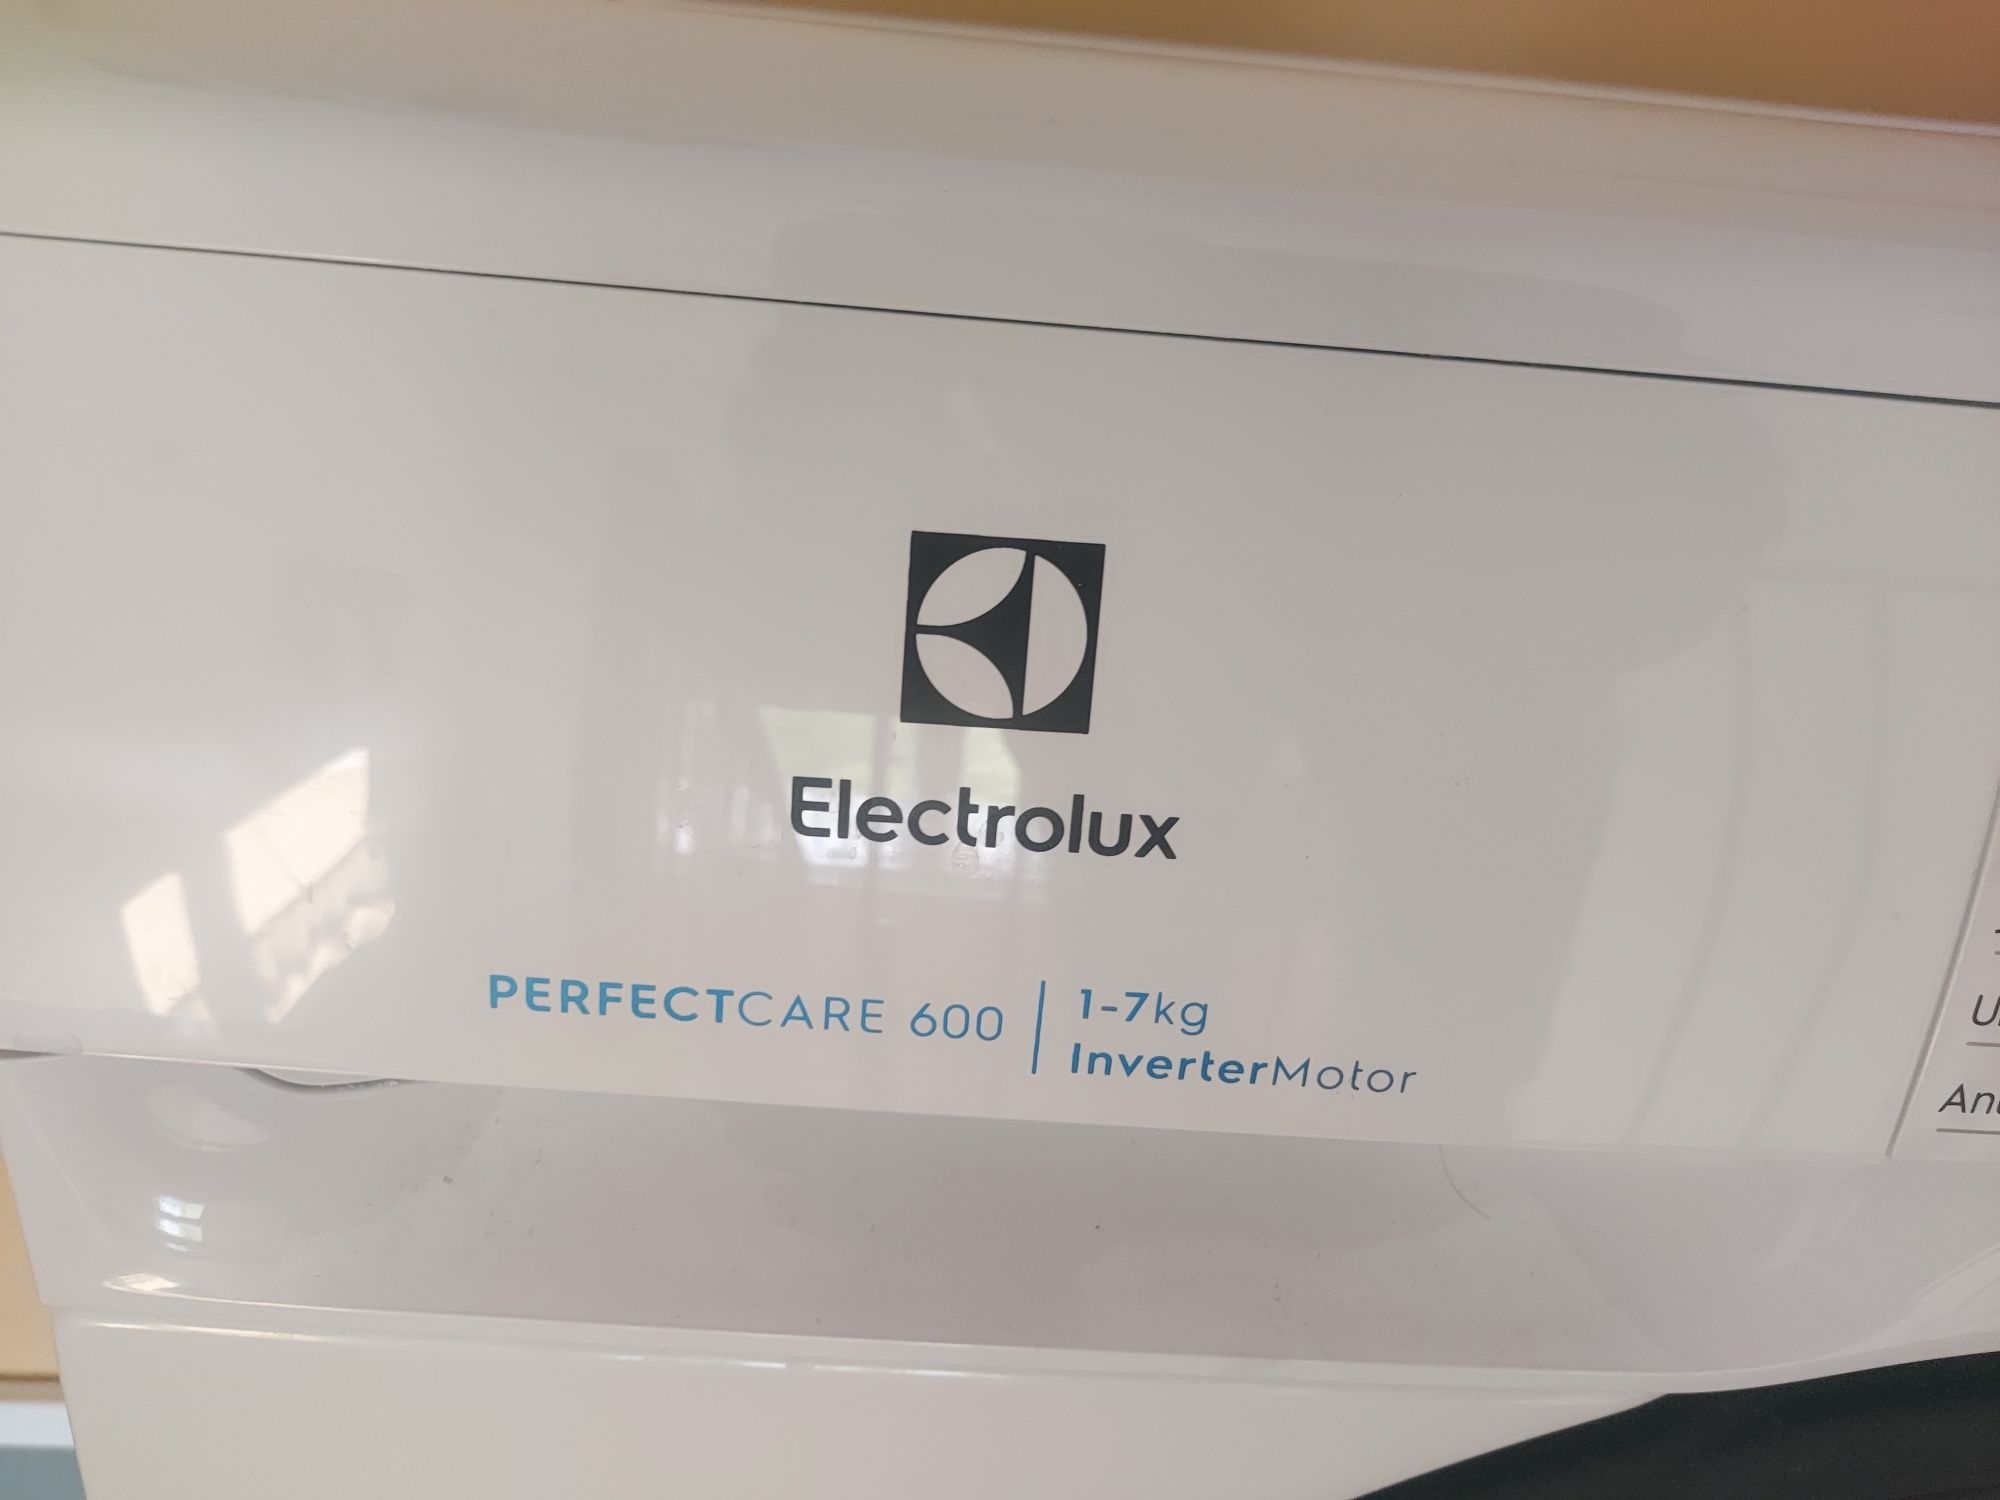 Pralka electrolux perfectcare 600 1-7kg inventermotot